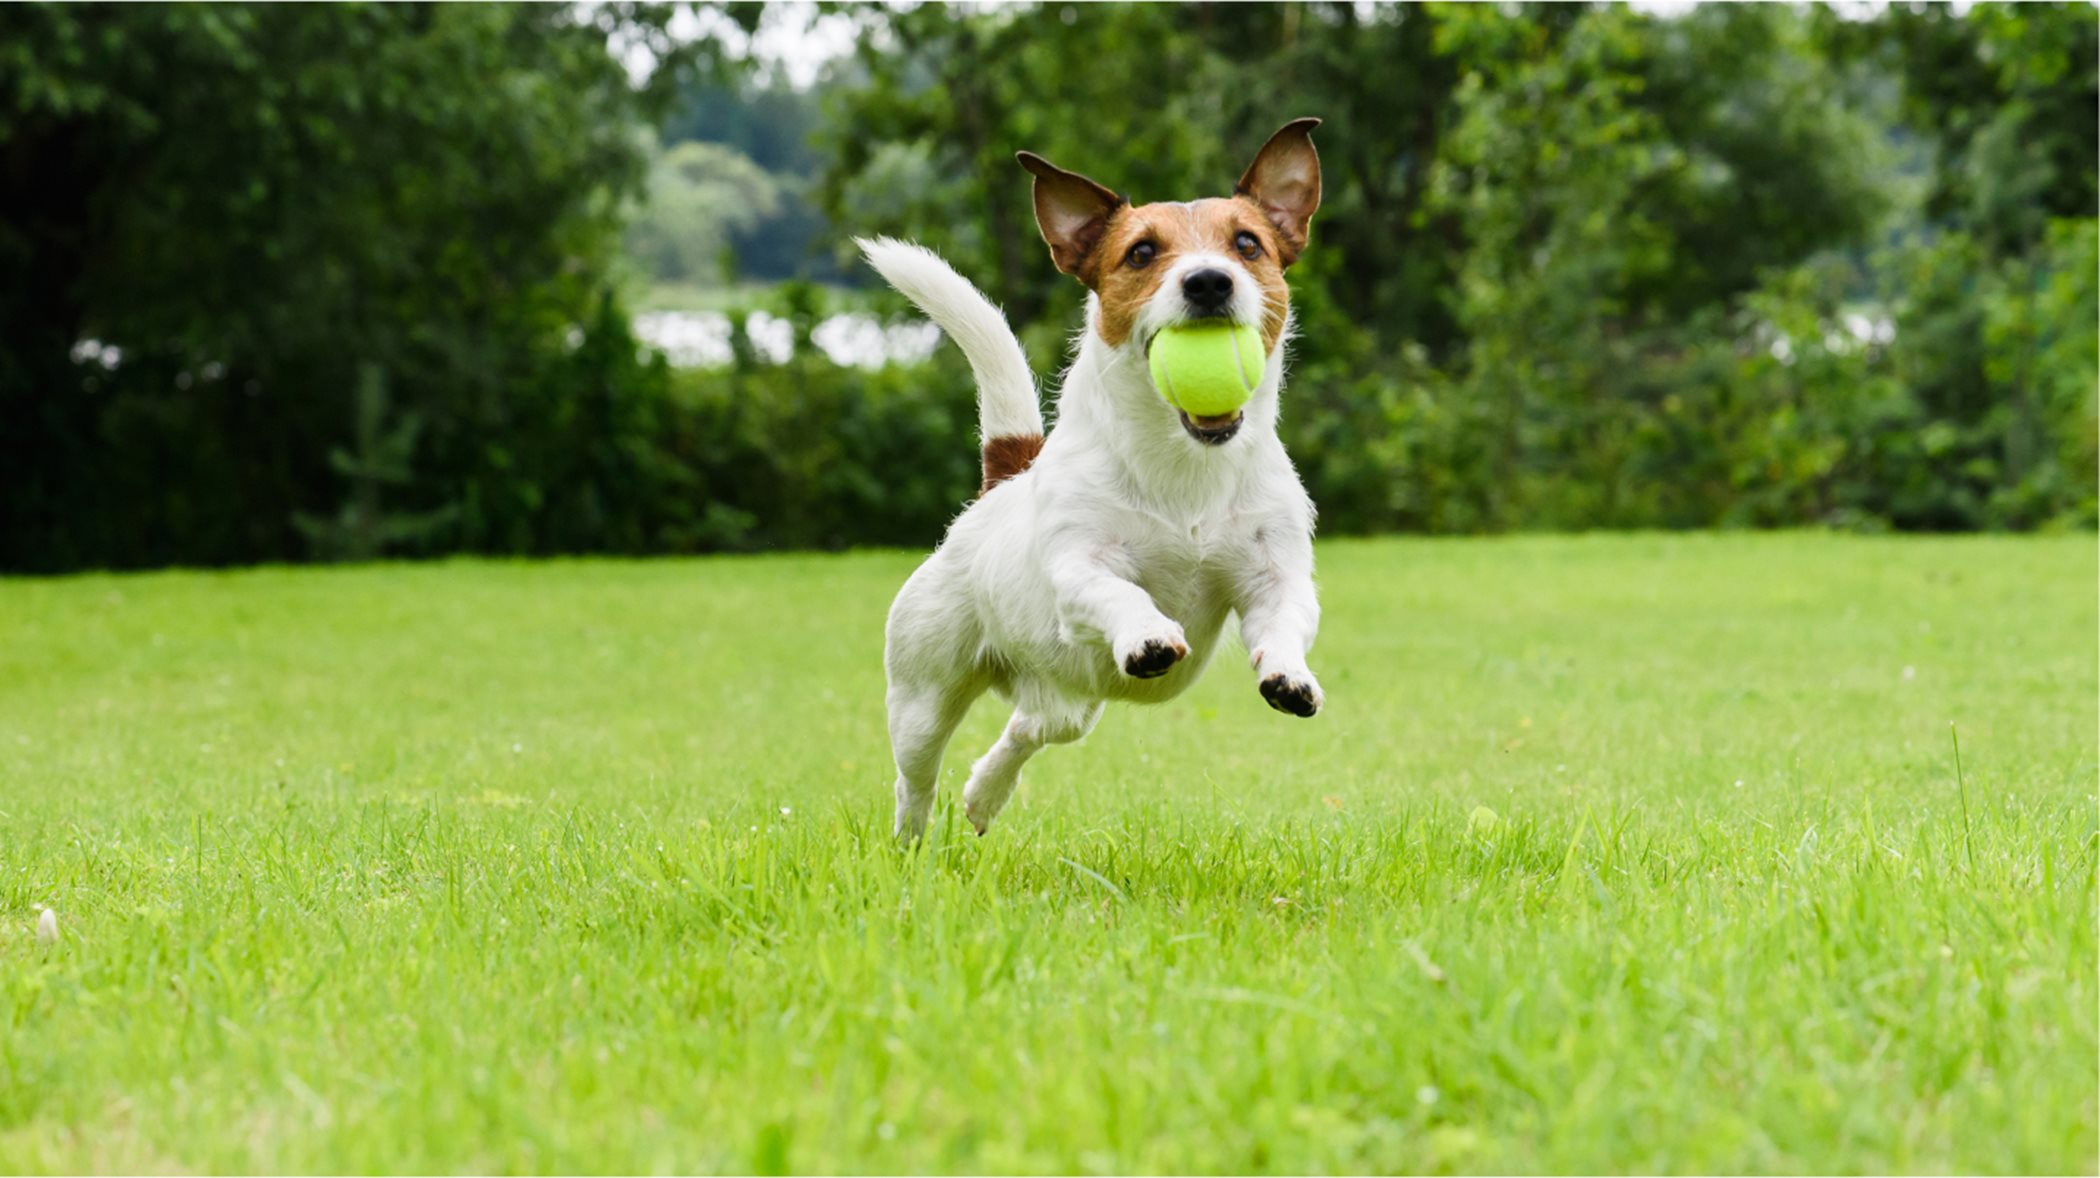 Dog running with tennis ball